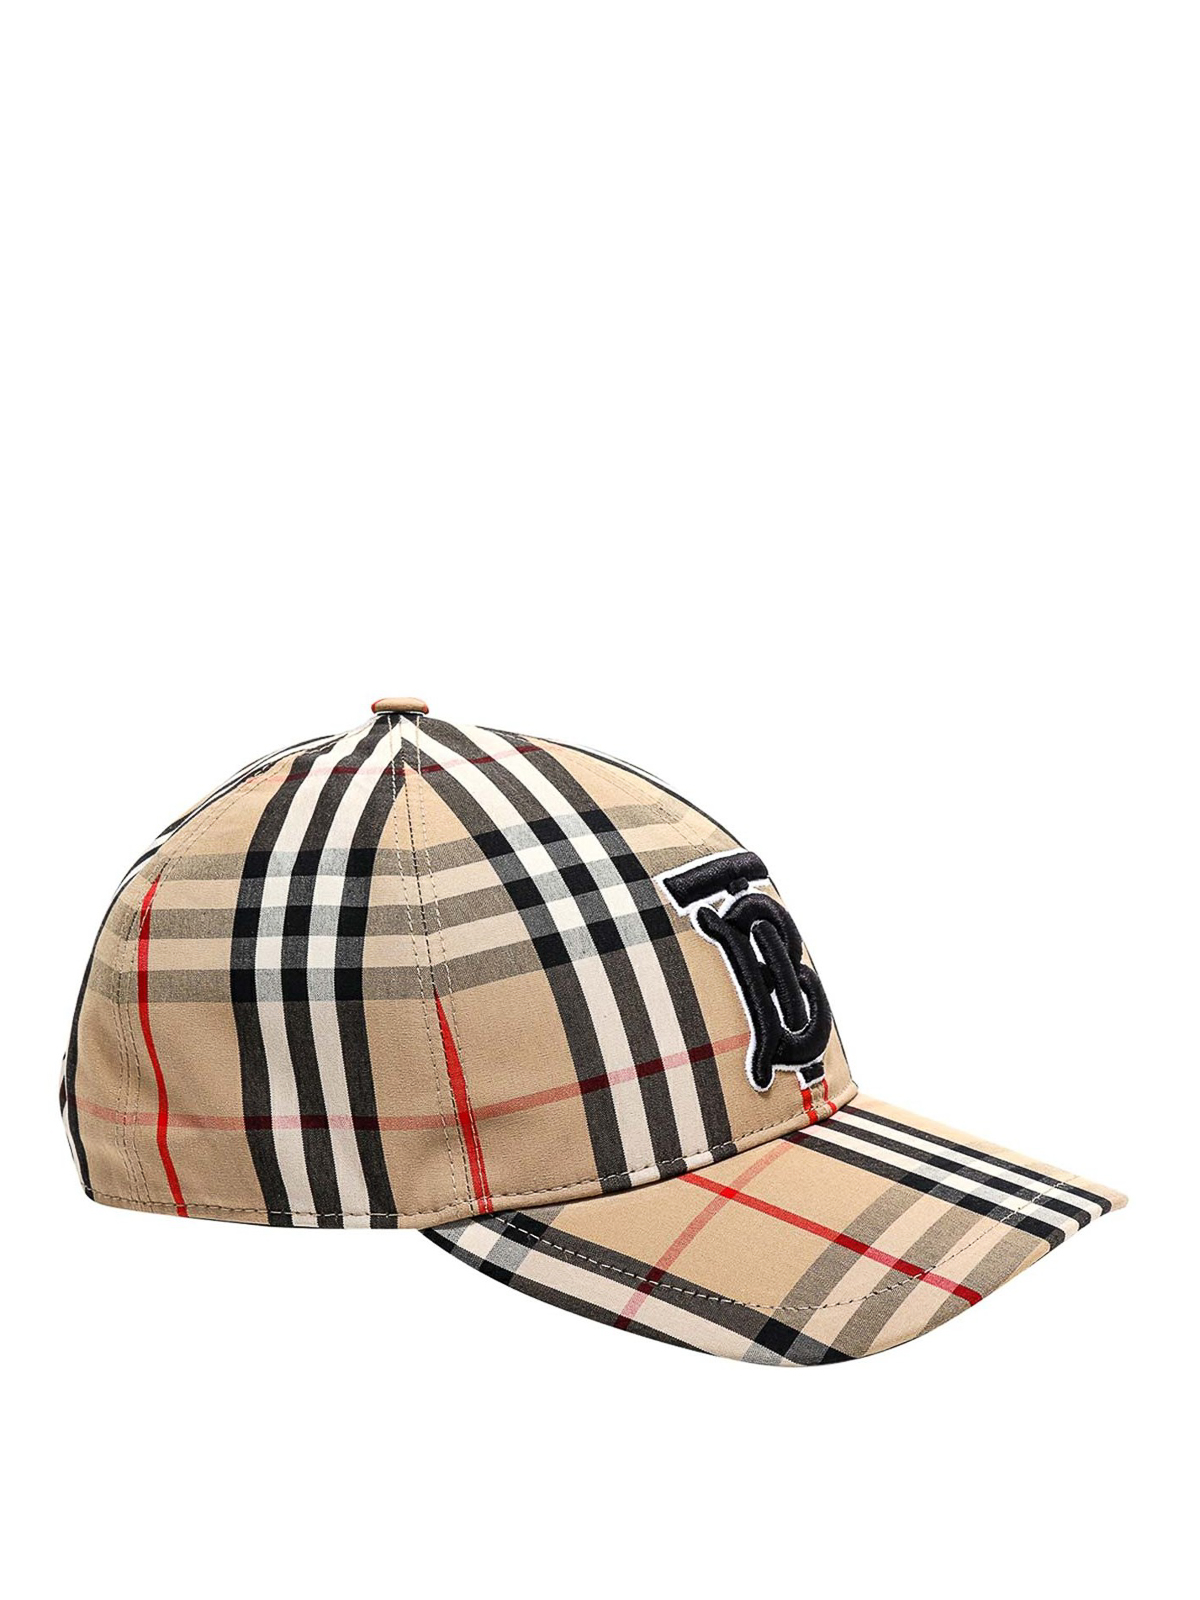 Afwijzen dood Plakken Hats & caps Burberry - Cotton cap - 8038504 | Shop online at iKRIX